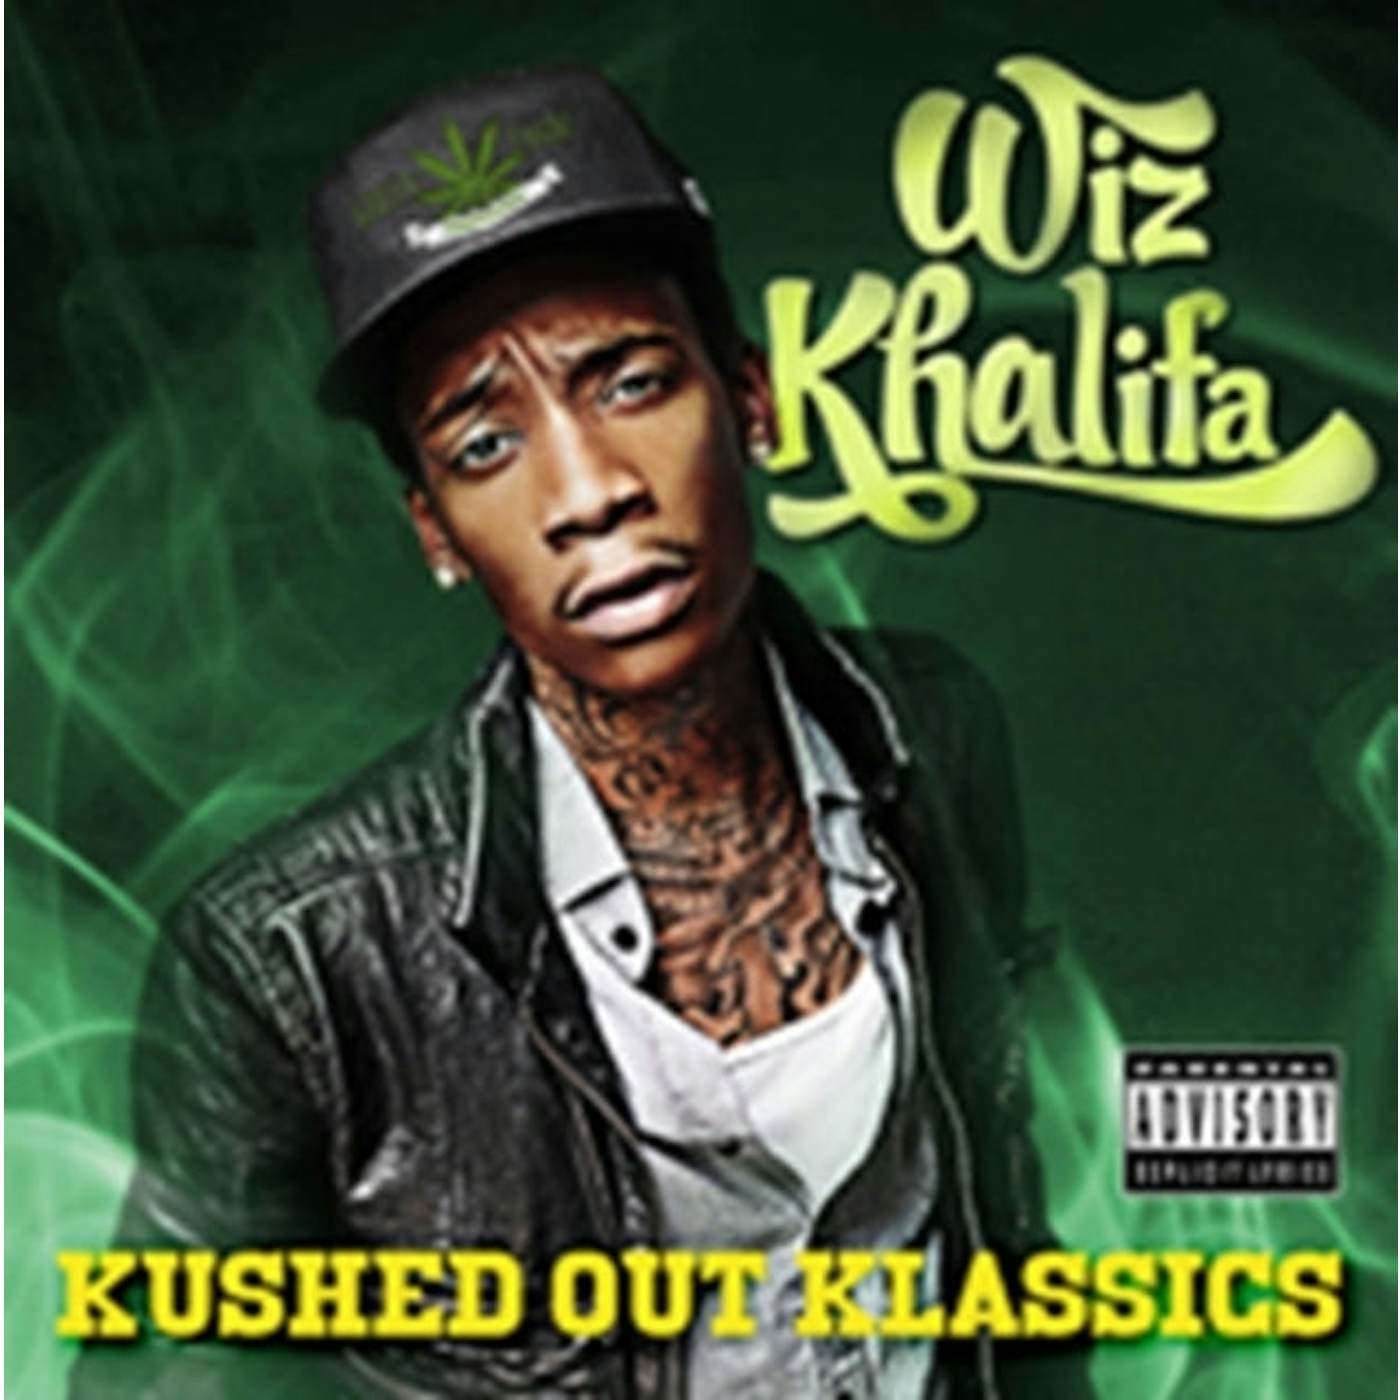 Wiz Khalifa CD - Kushed Out Klassics